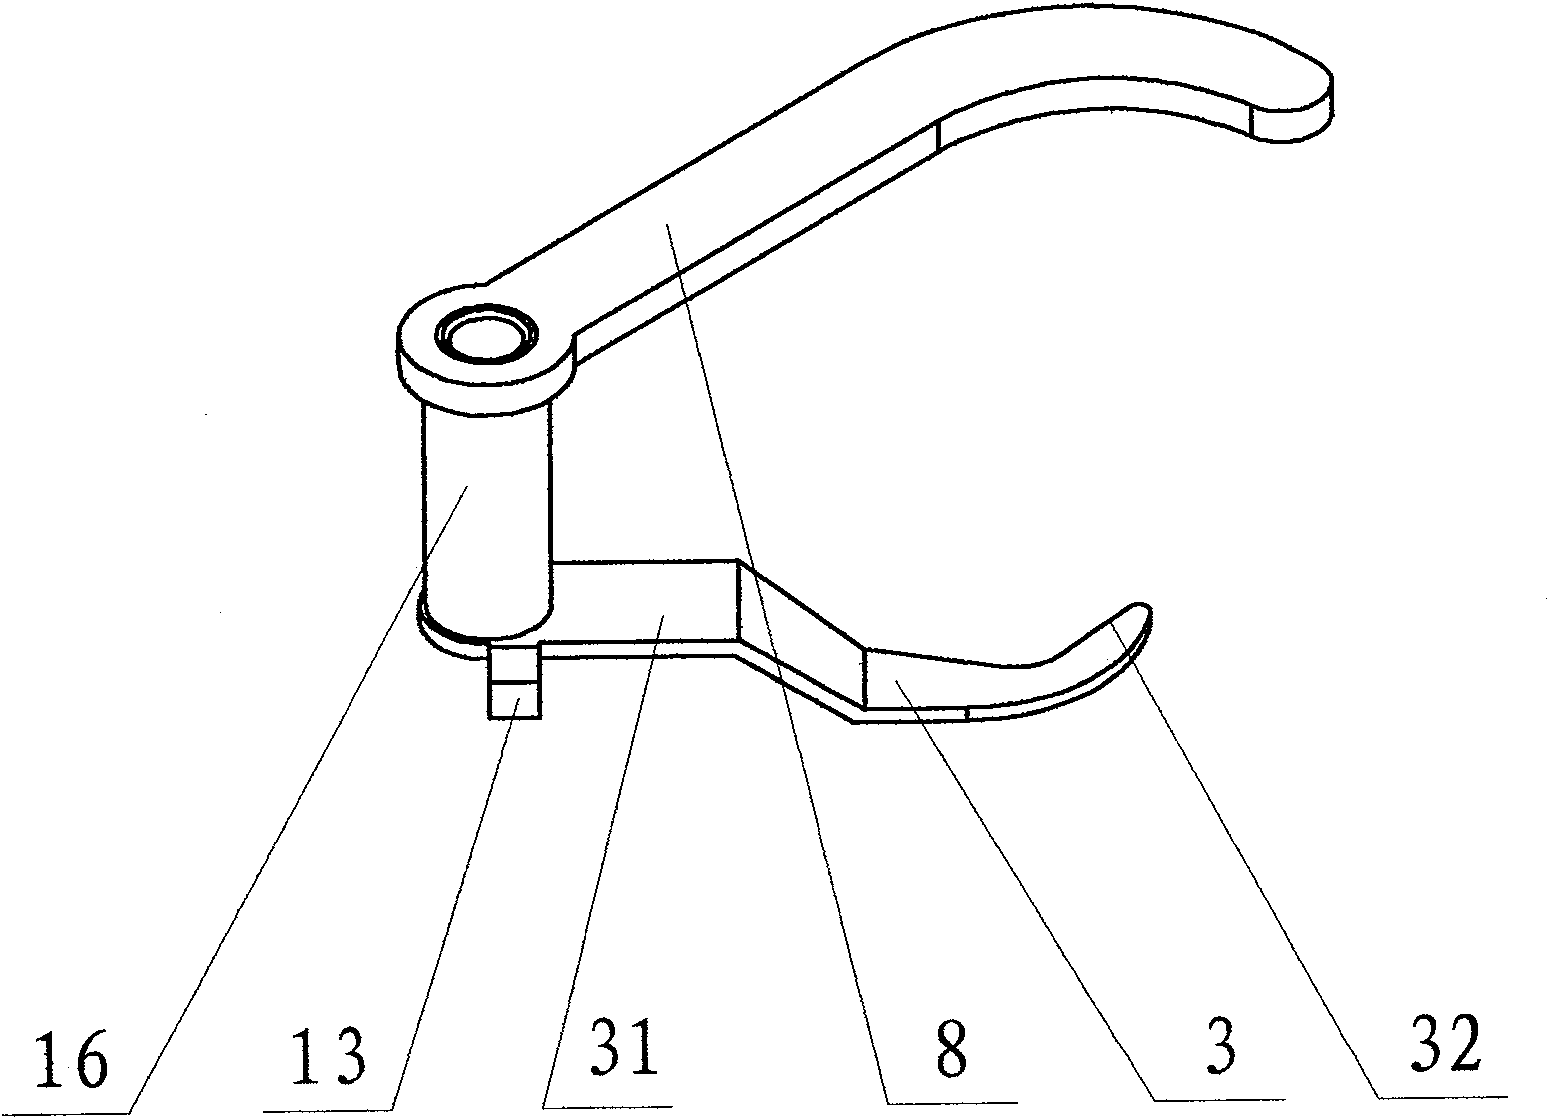 Yarn splicing guide device of automatic bobbin winder